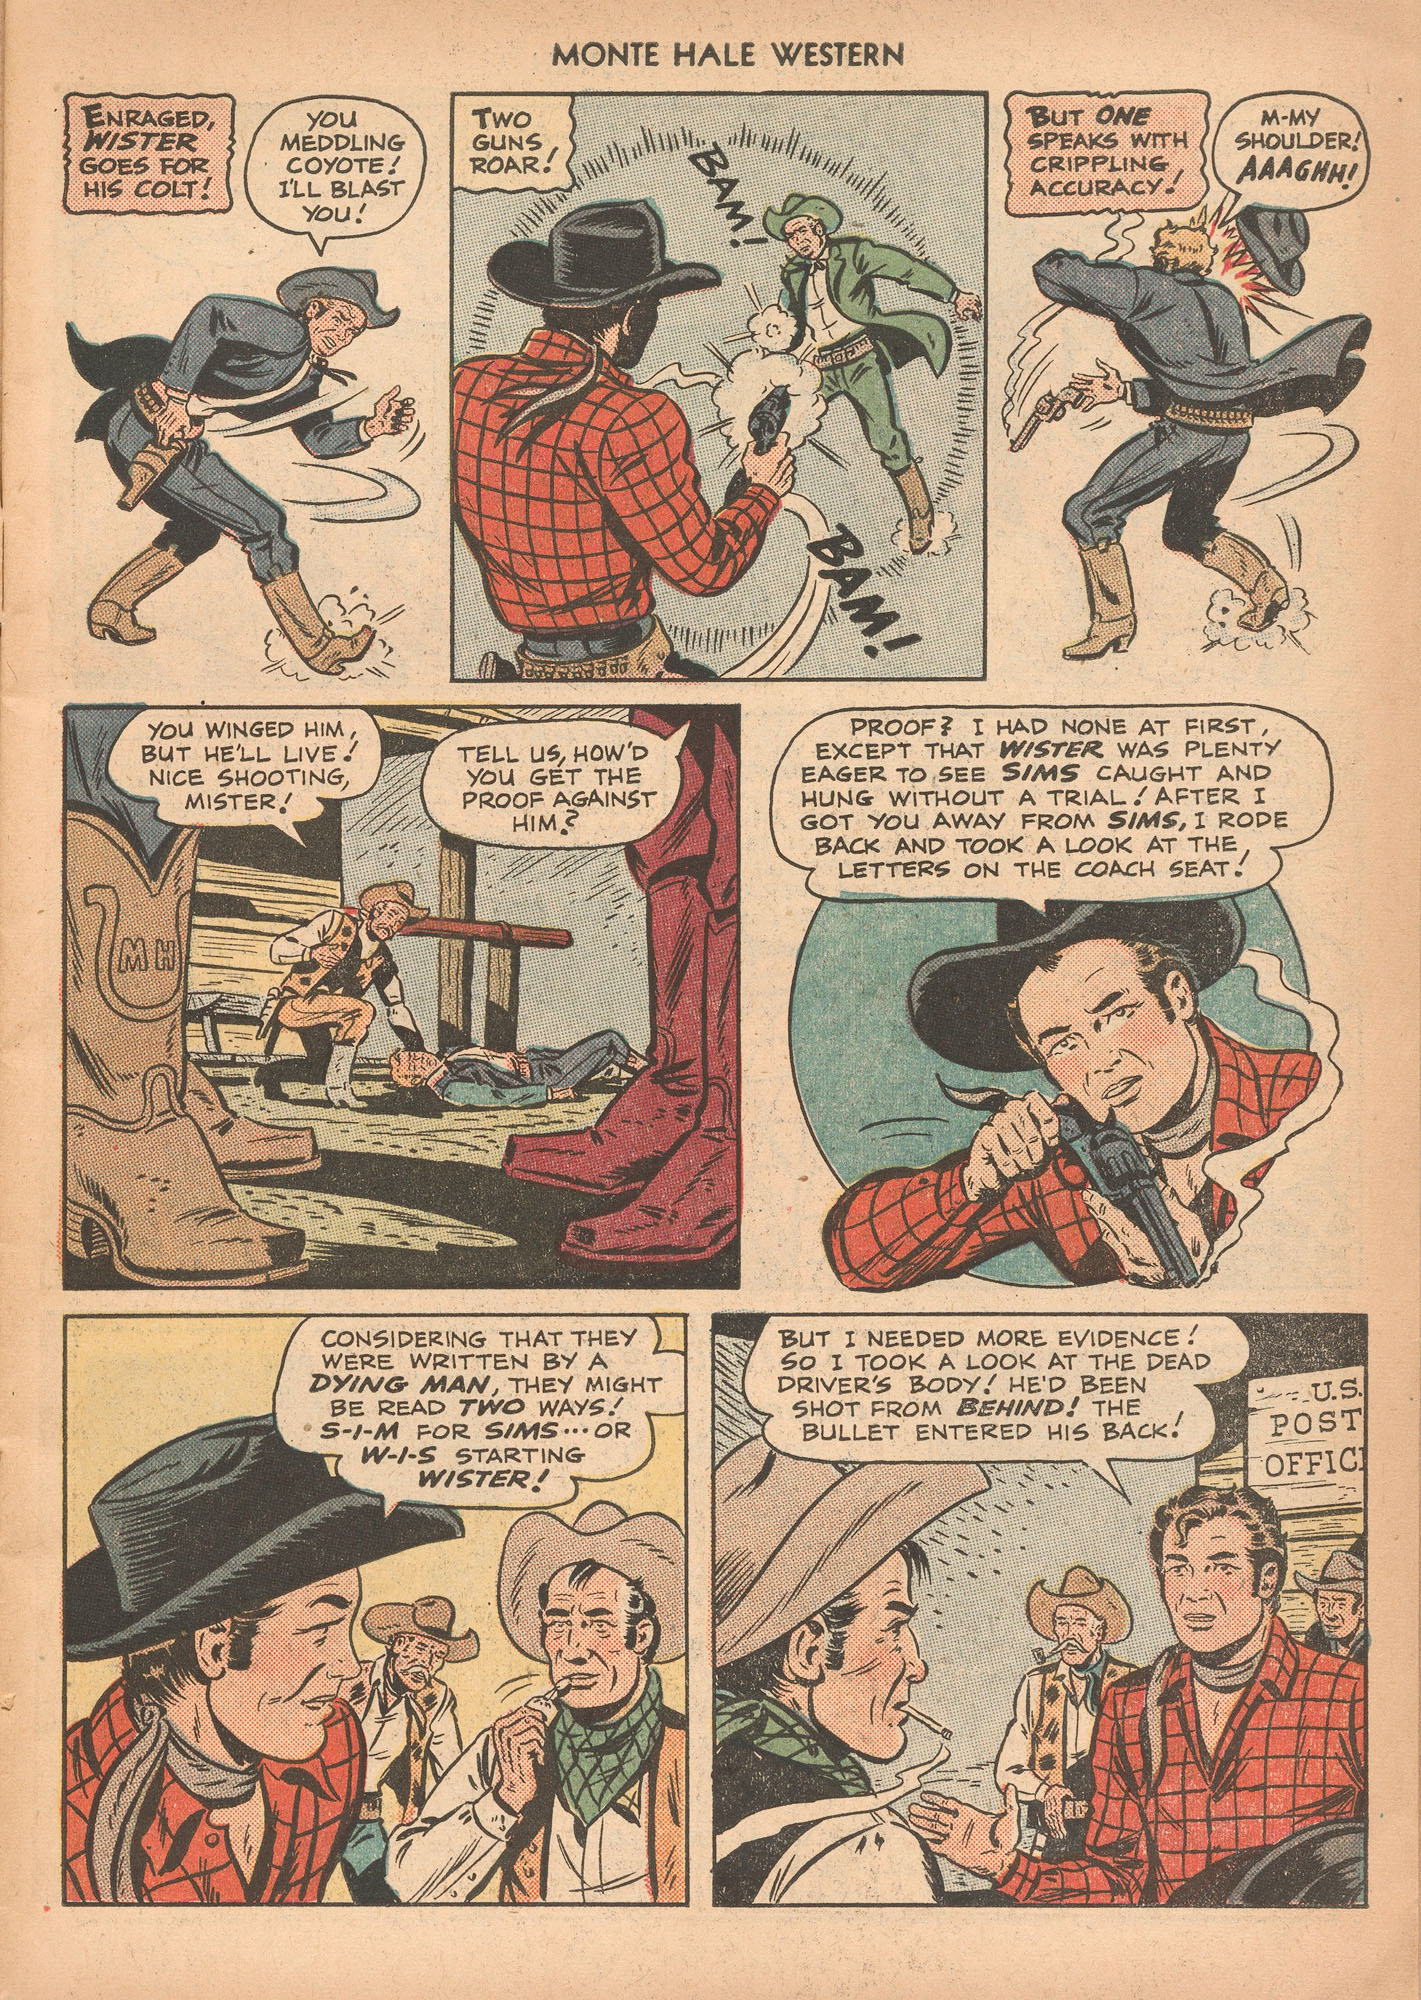 Read online Monte Hale Western comic -  Issue #43 - 11